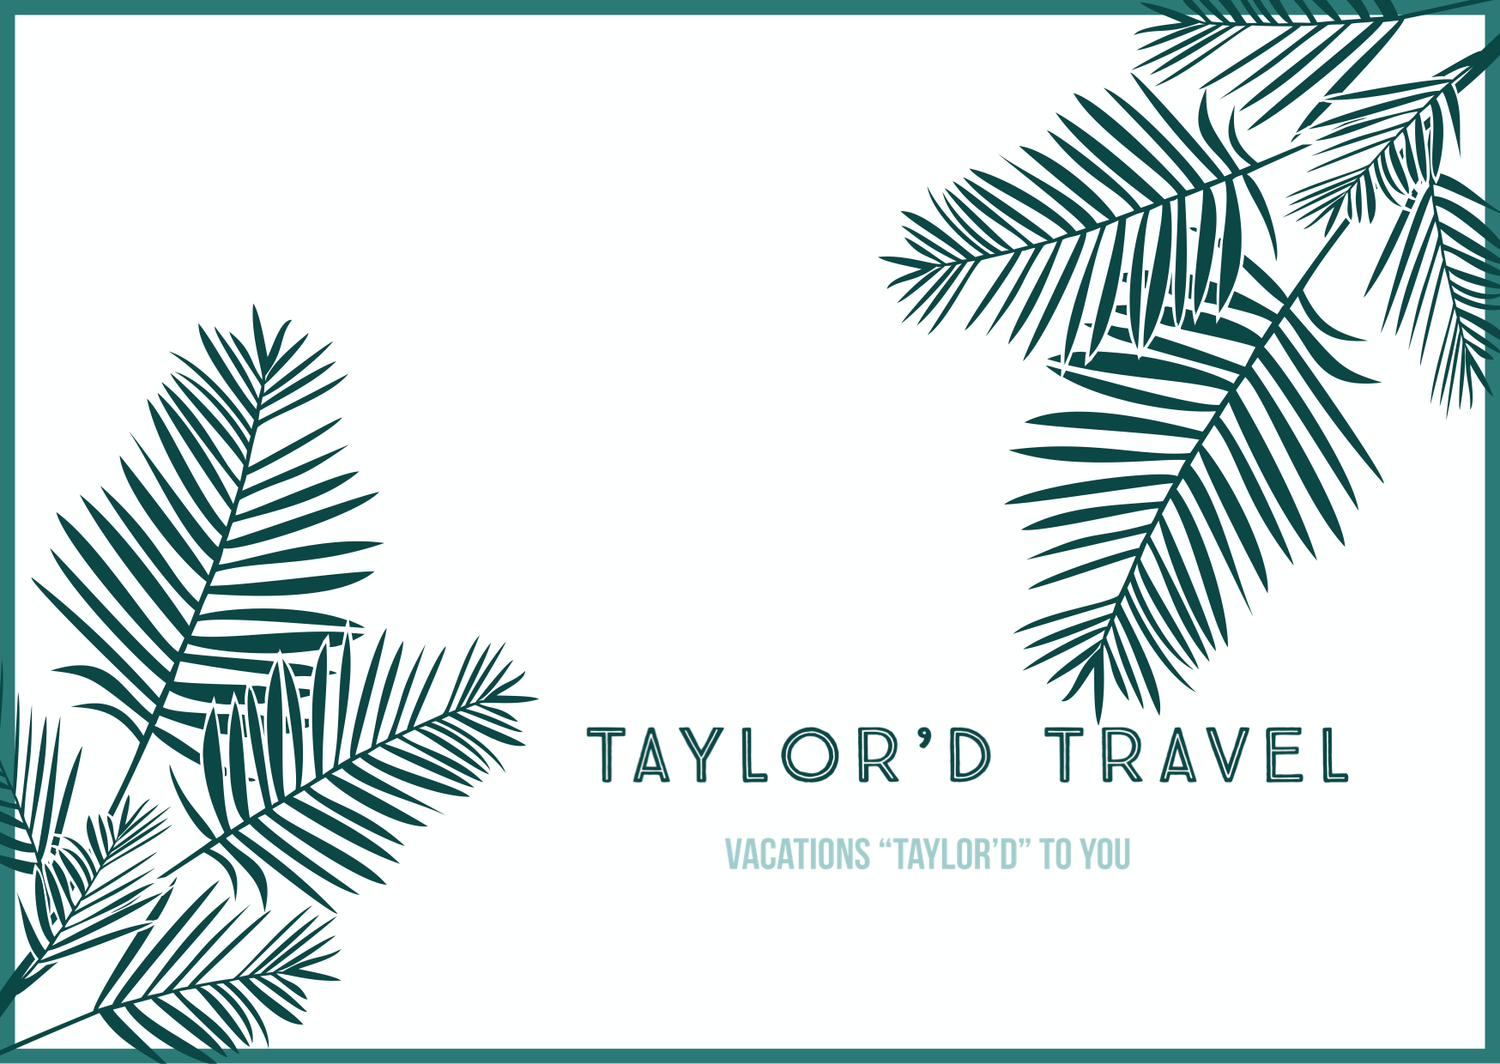 Taylor’d Travel